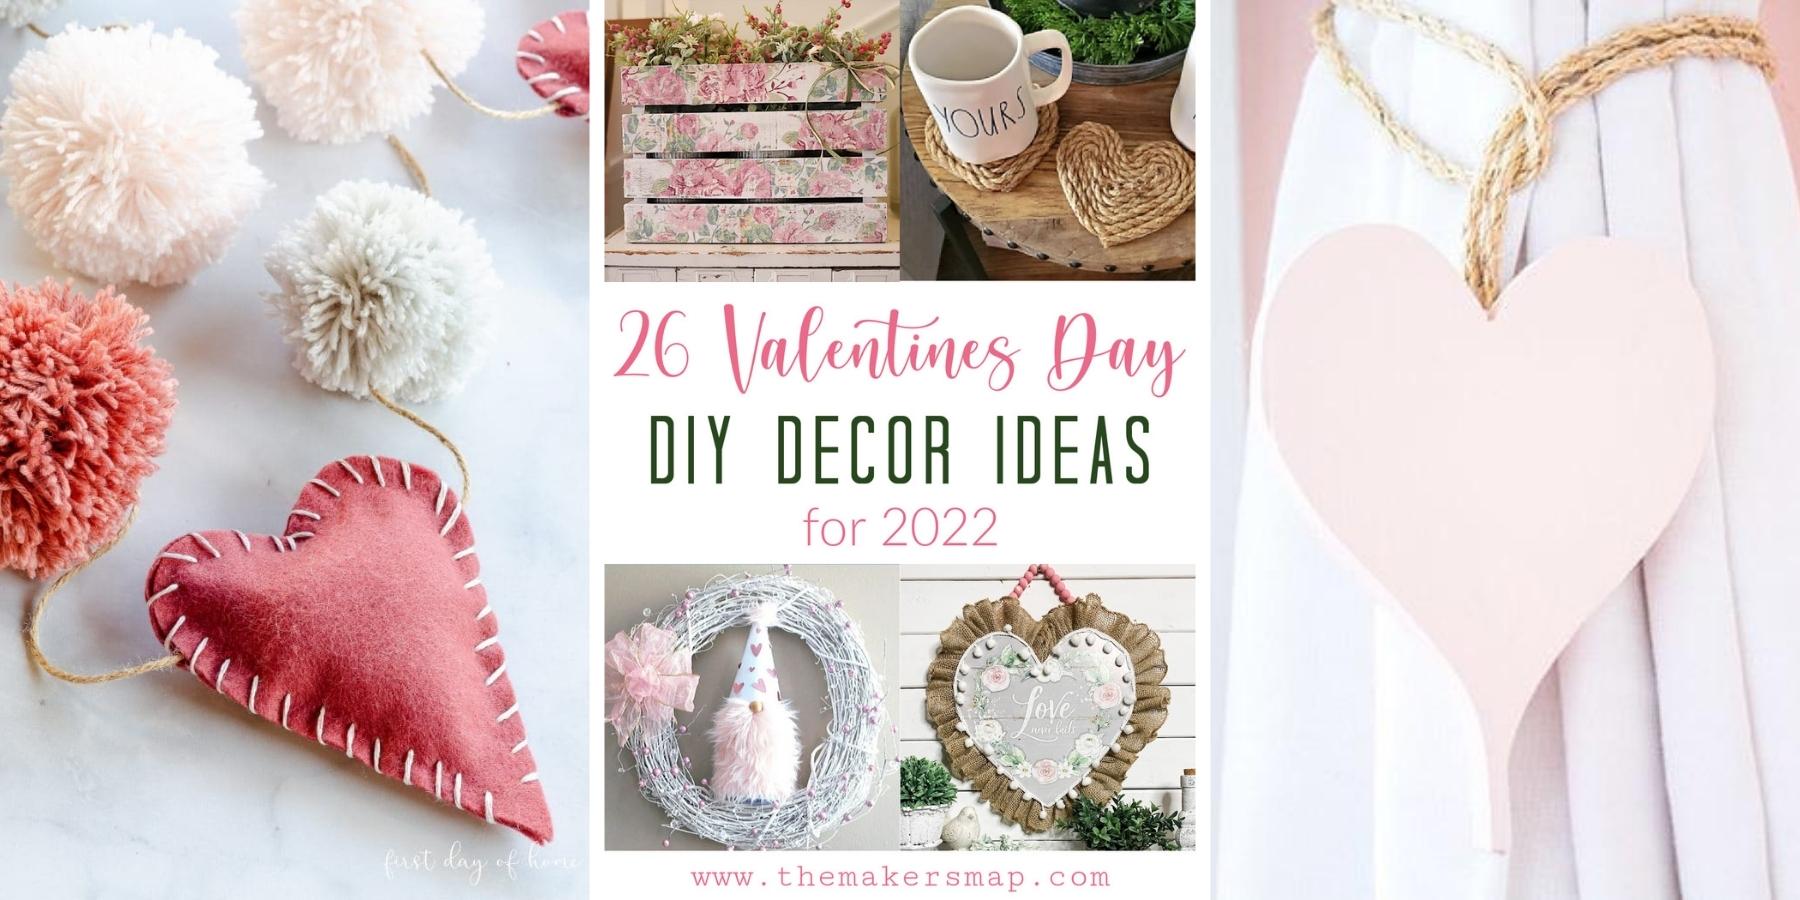 26 Valentine’s Day DIY Decor Ideas for 2022